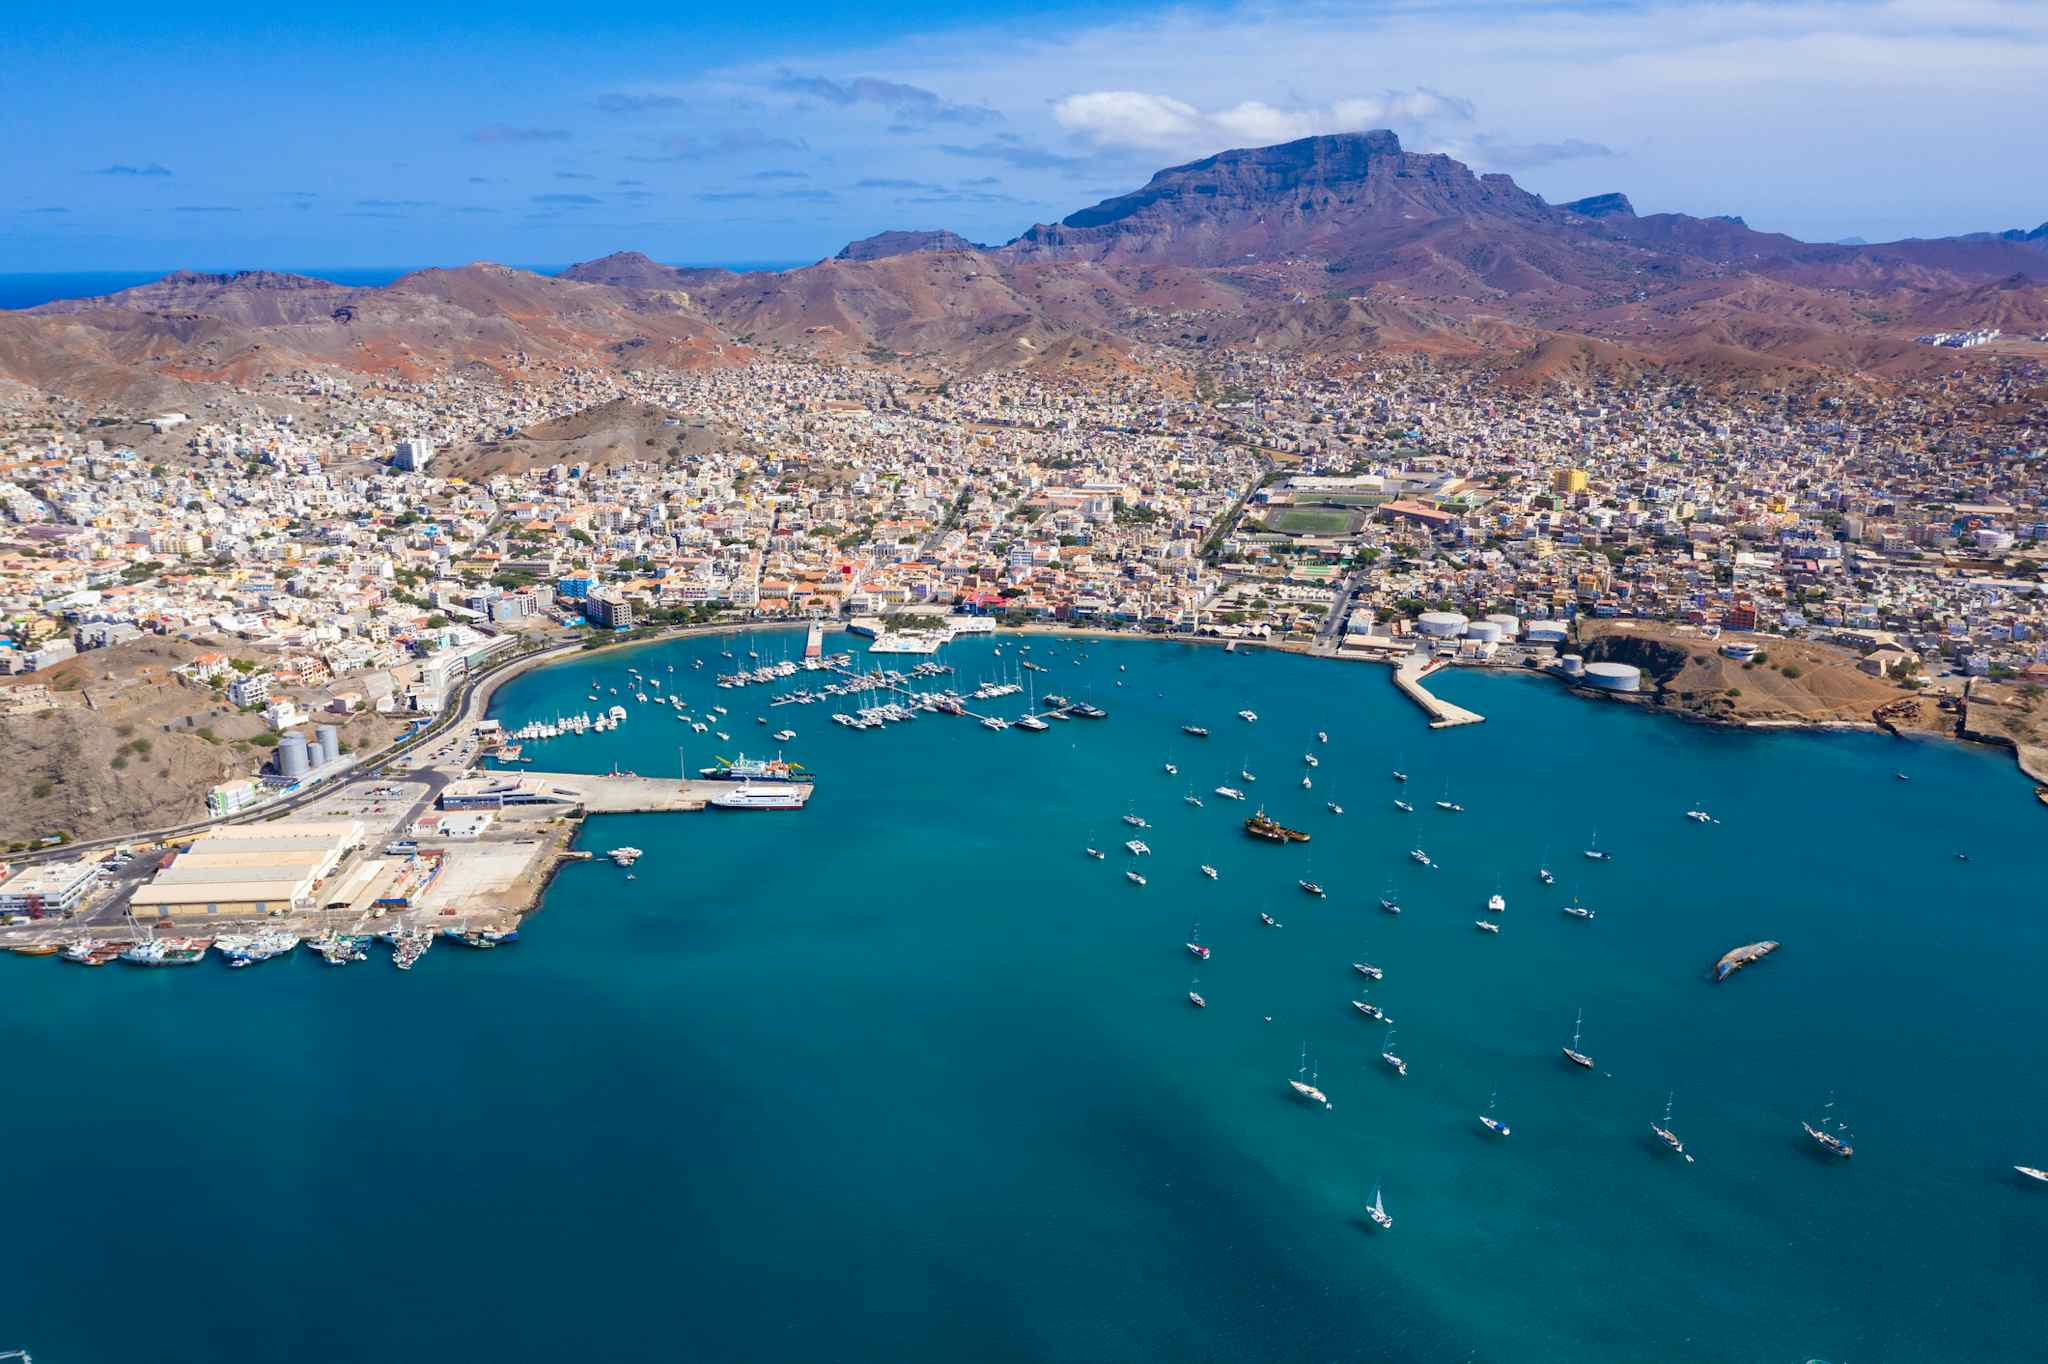 Aerial view of Praia city in Santiago - Capital of Cape Verde Islands, Cabo Verde. Photo: Dreamstime/168753813